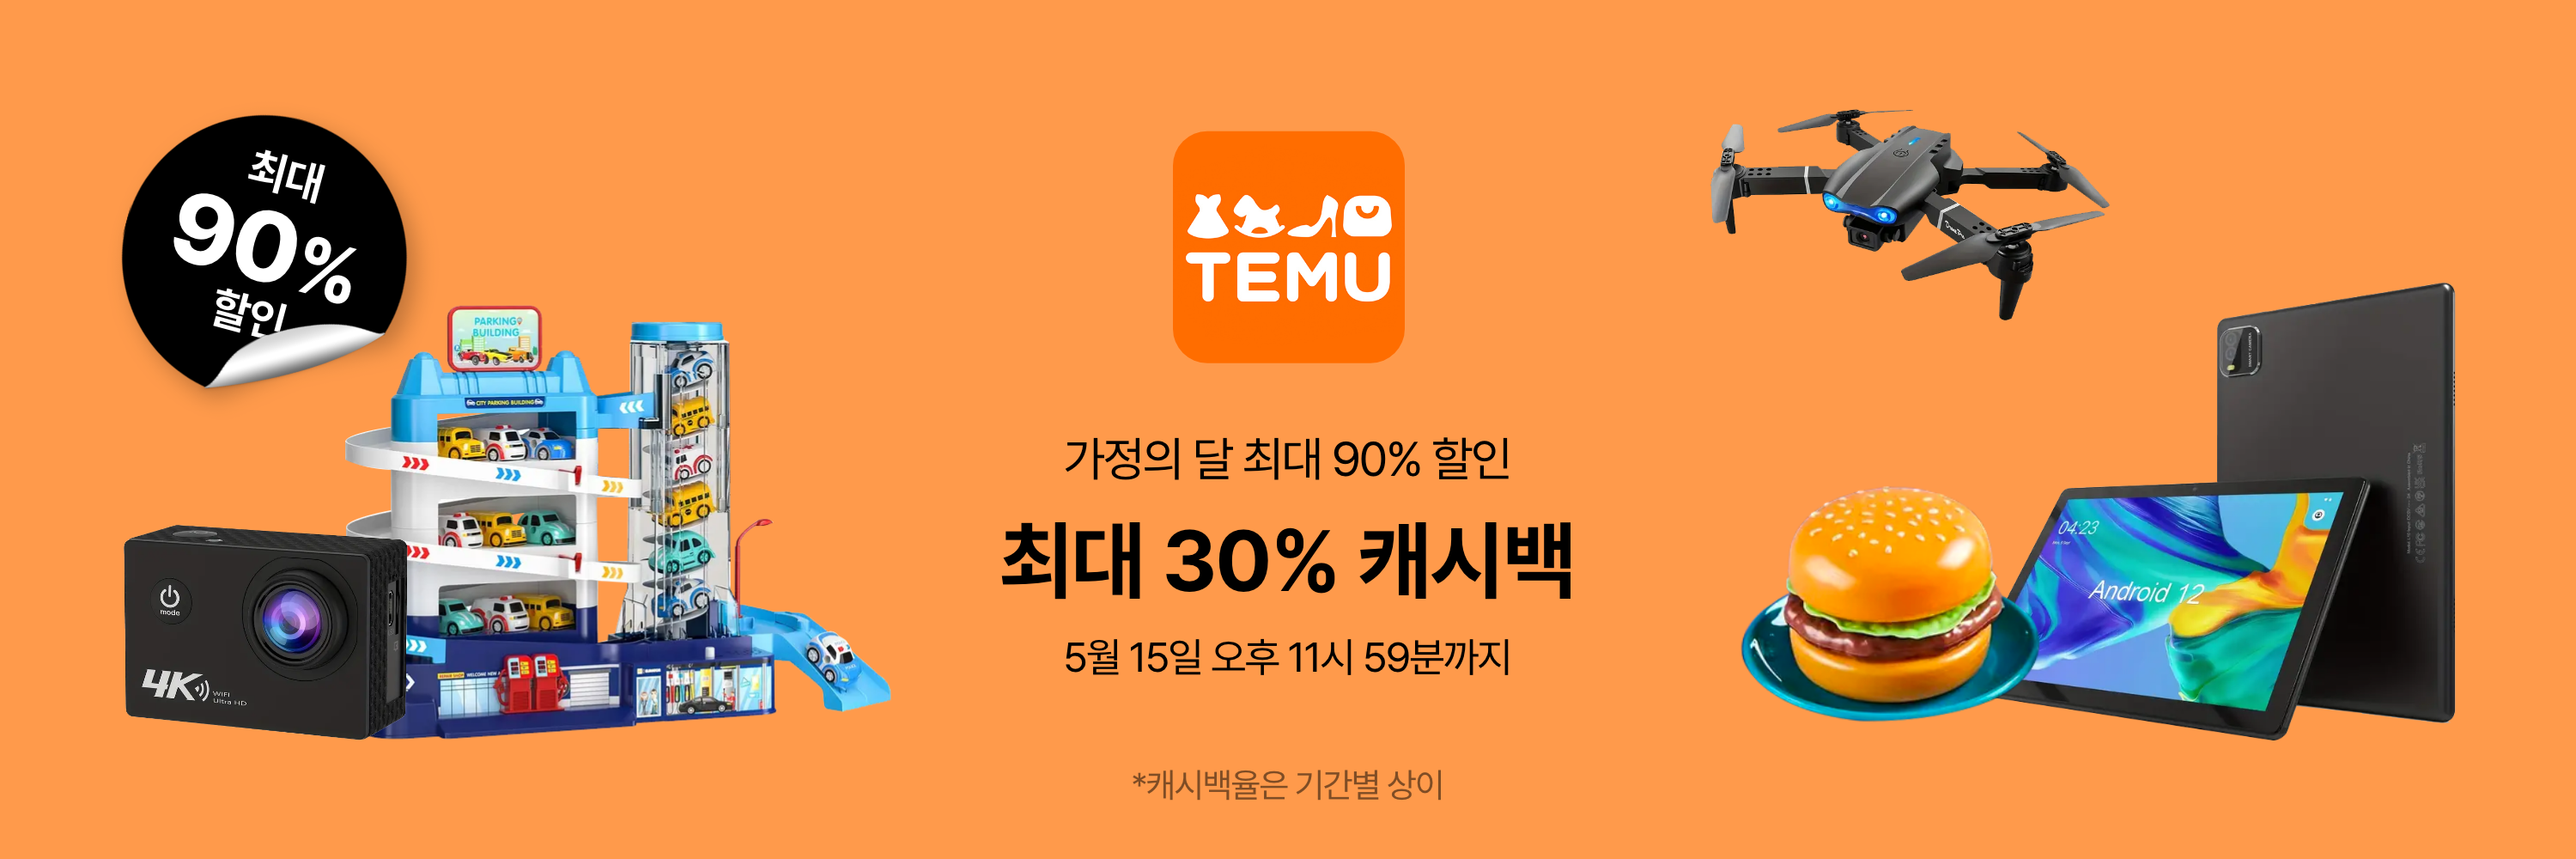 temu-promotion-header - 30%